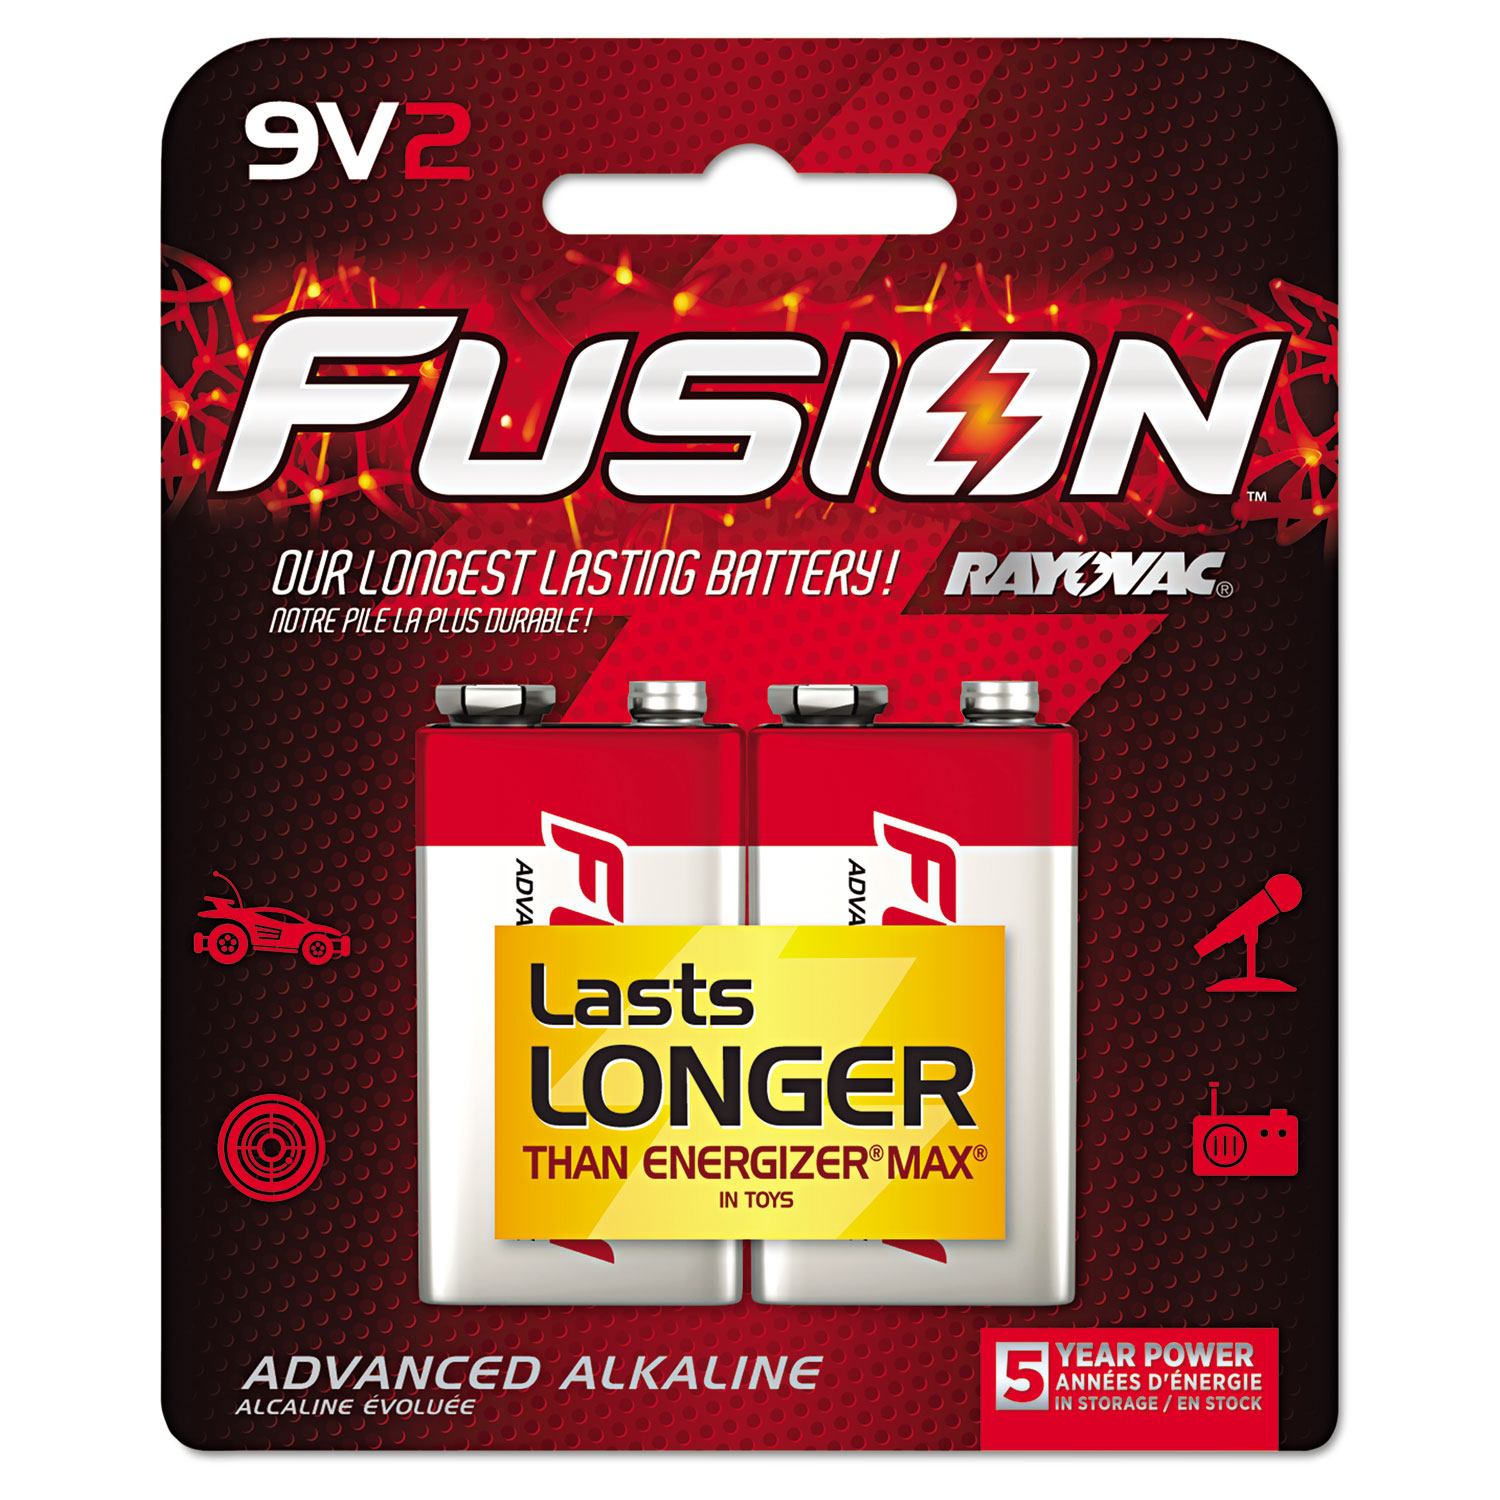 Fusion Advanced Alkaline Batteries, 9V, 2/Pack